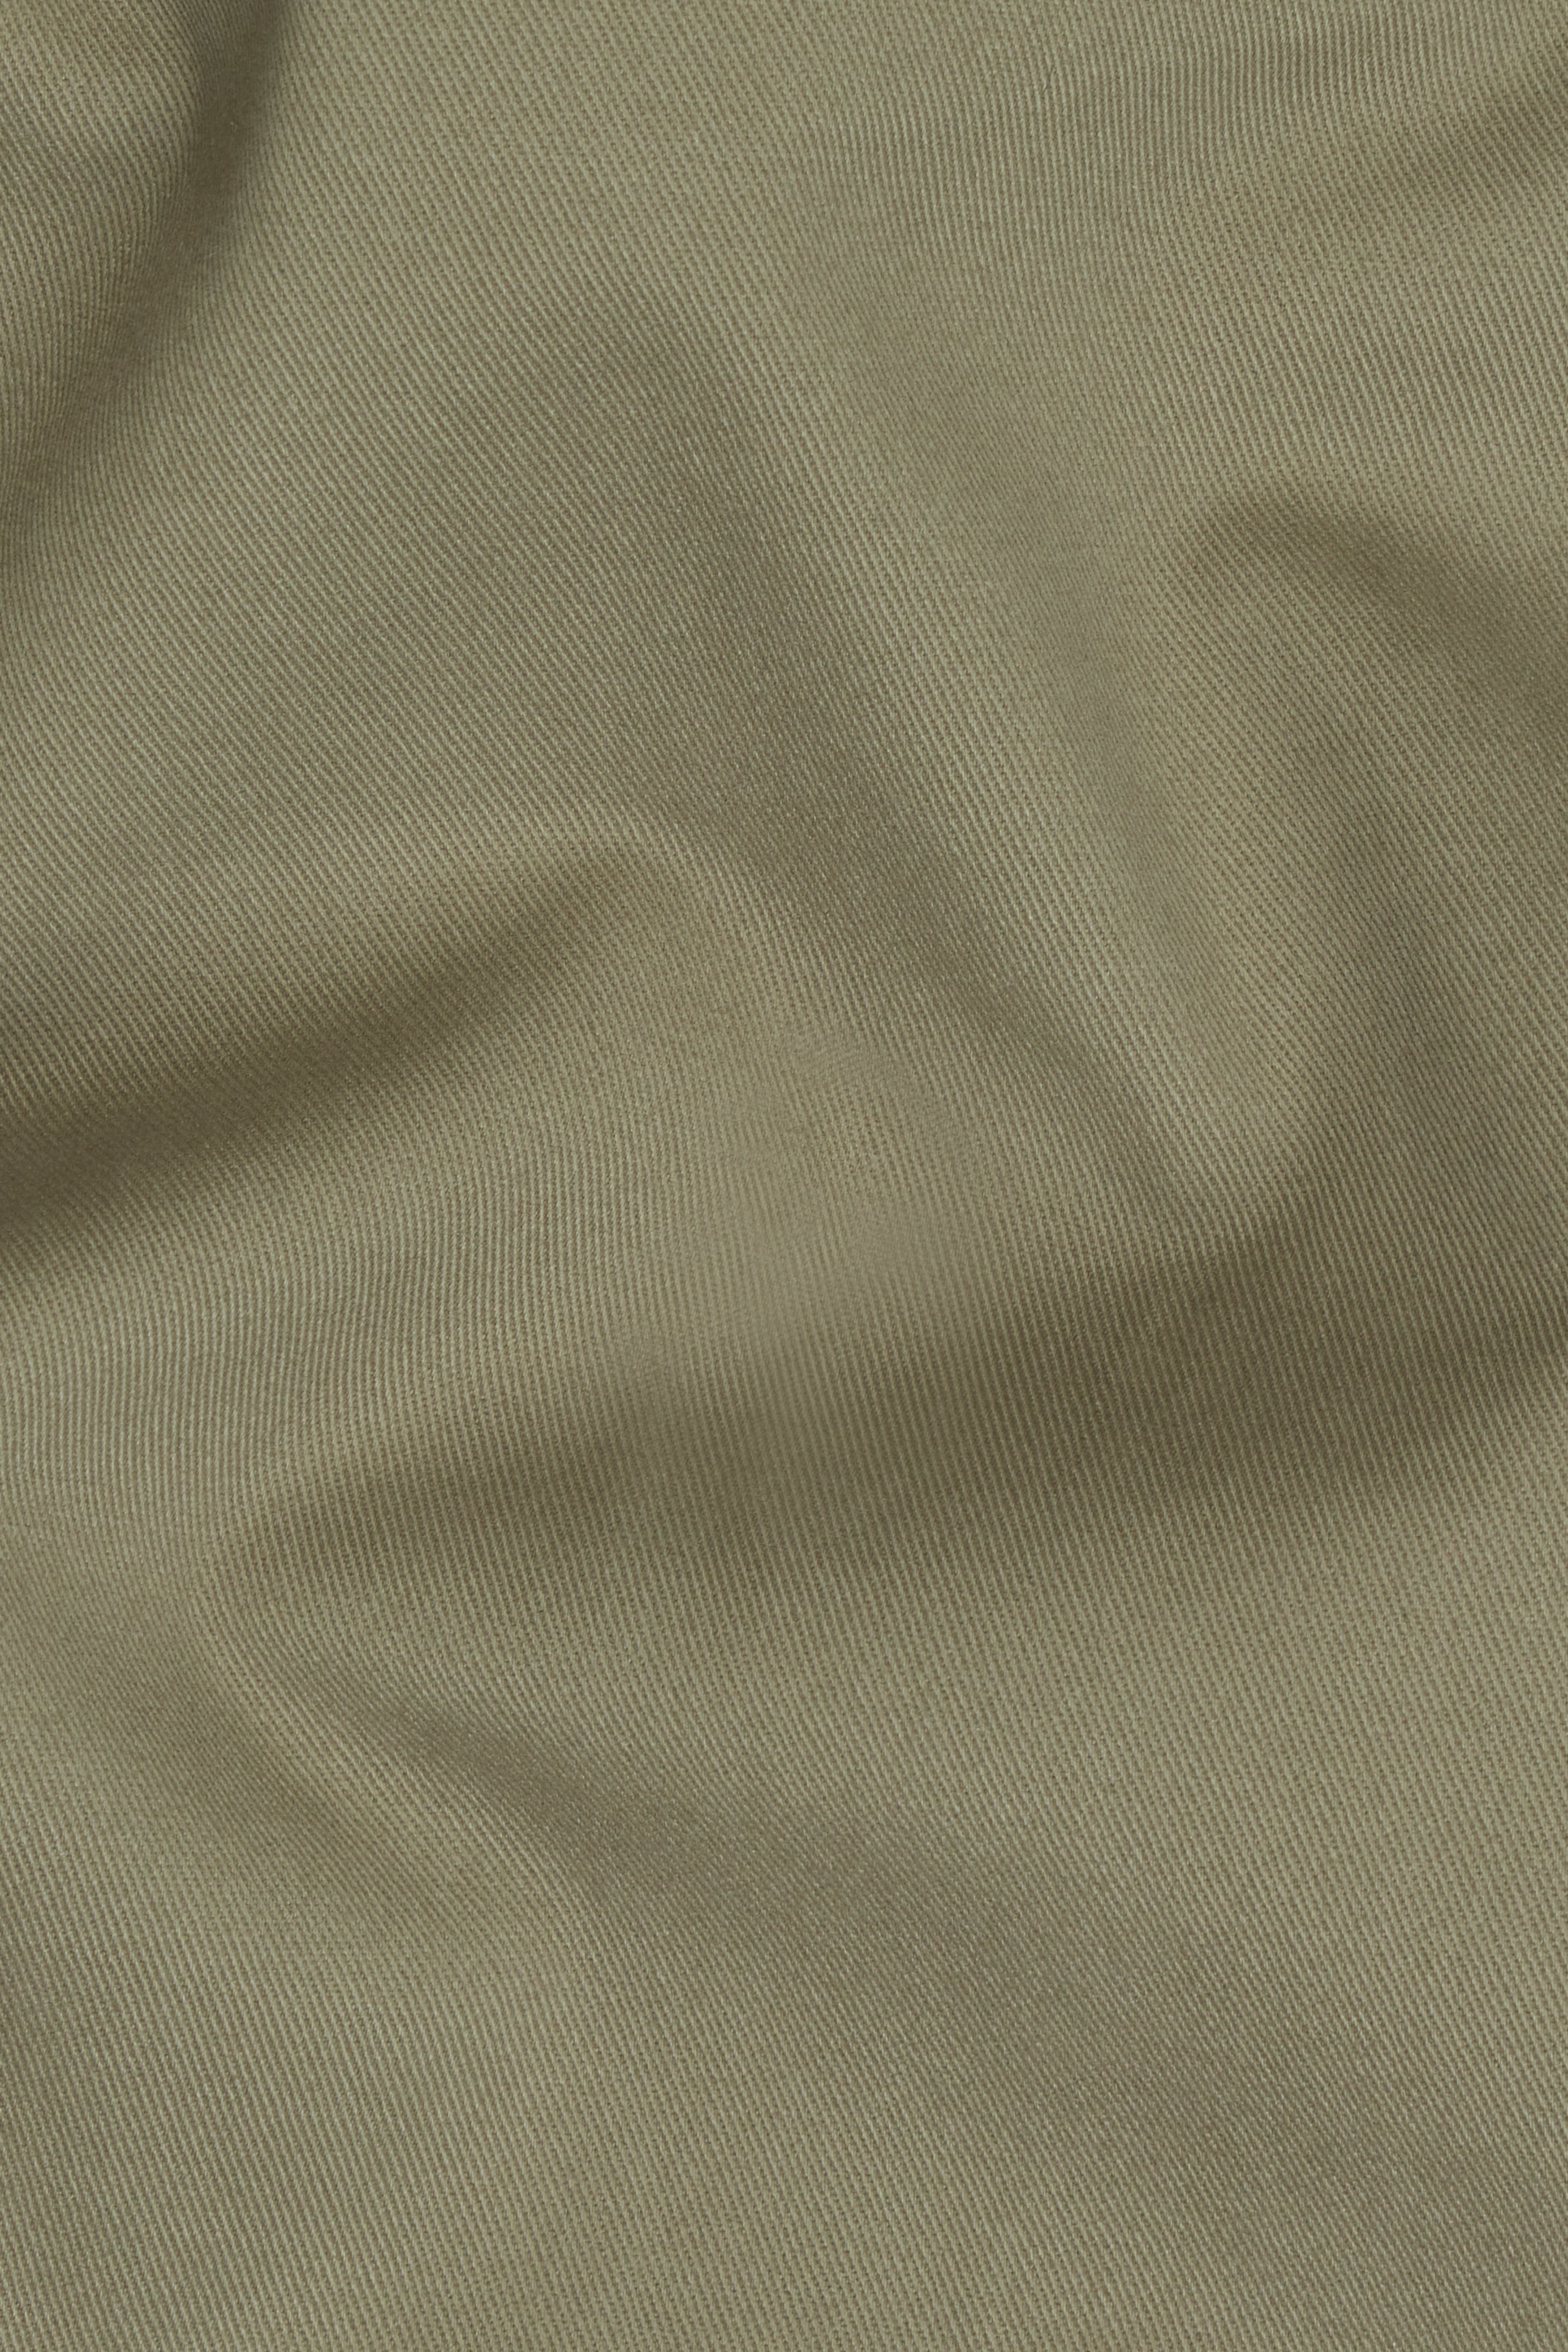 Dune Brown Premium Cotton Chinos Pant